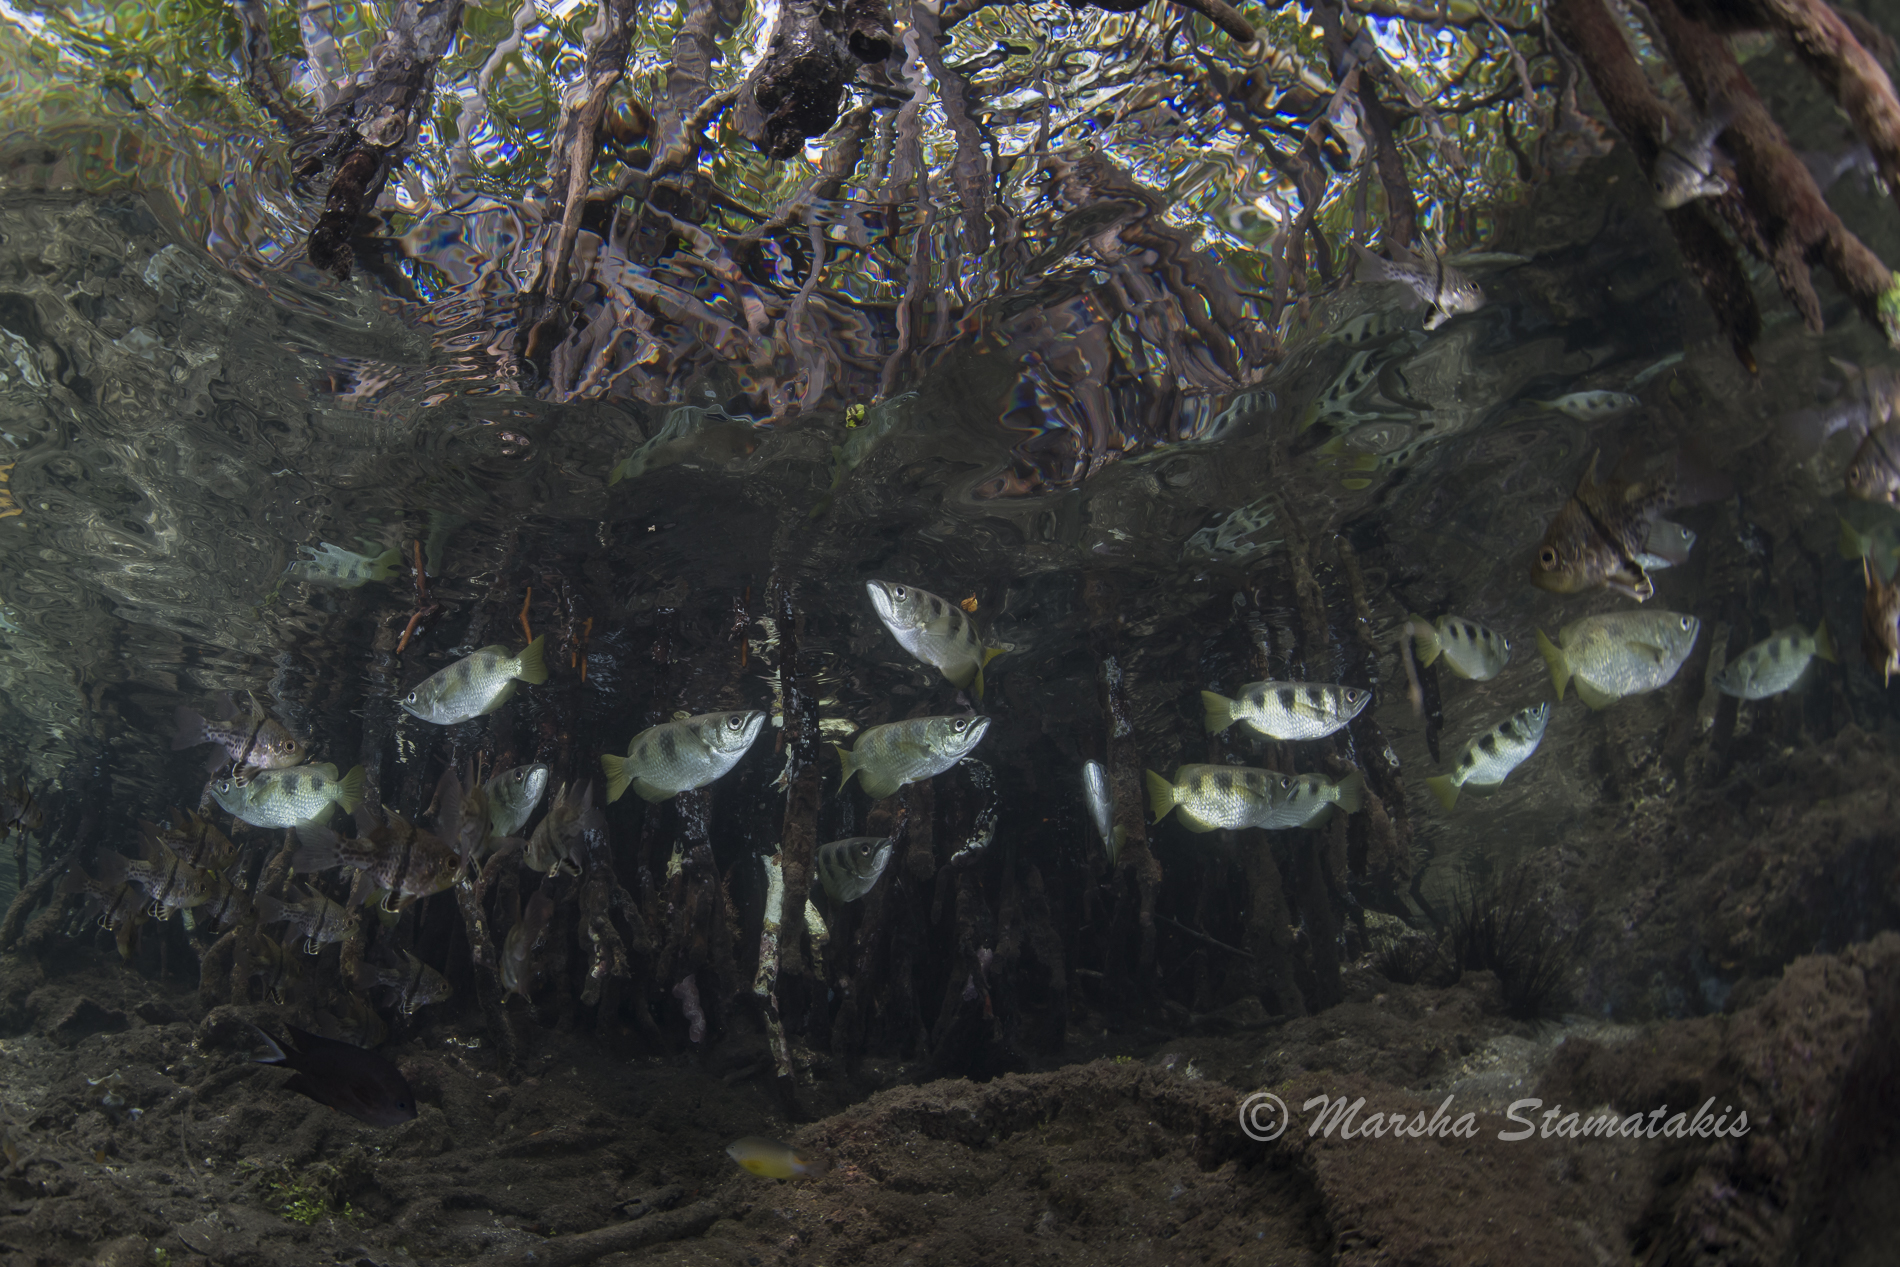 Archer fish Solomon Islands